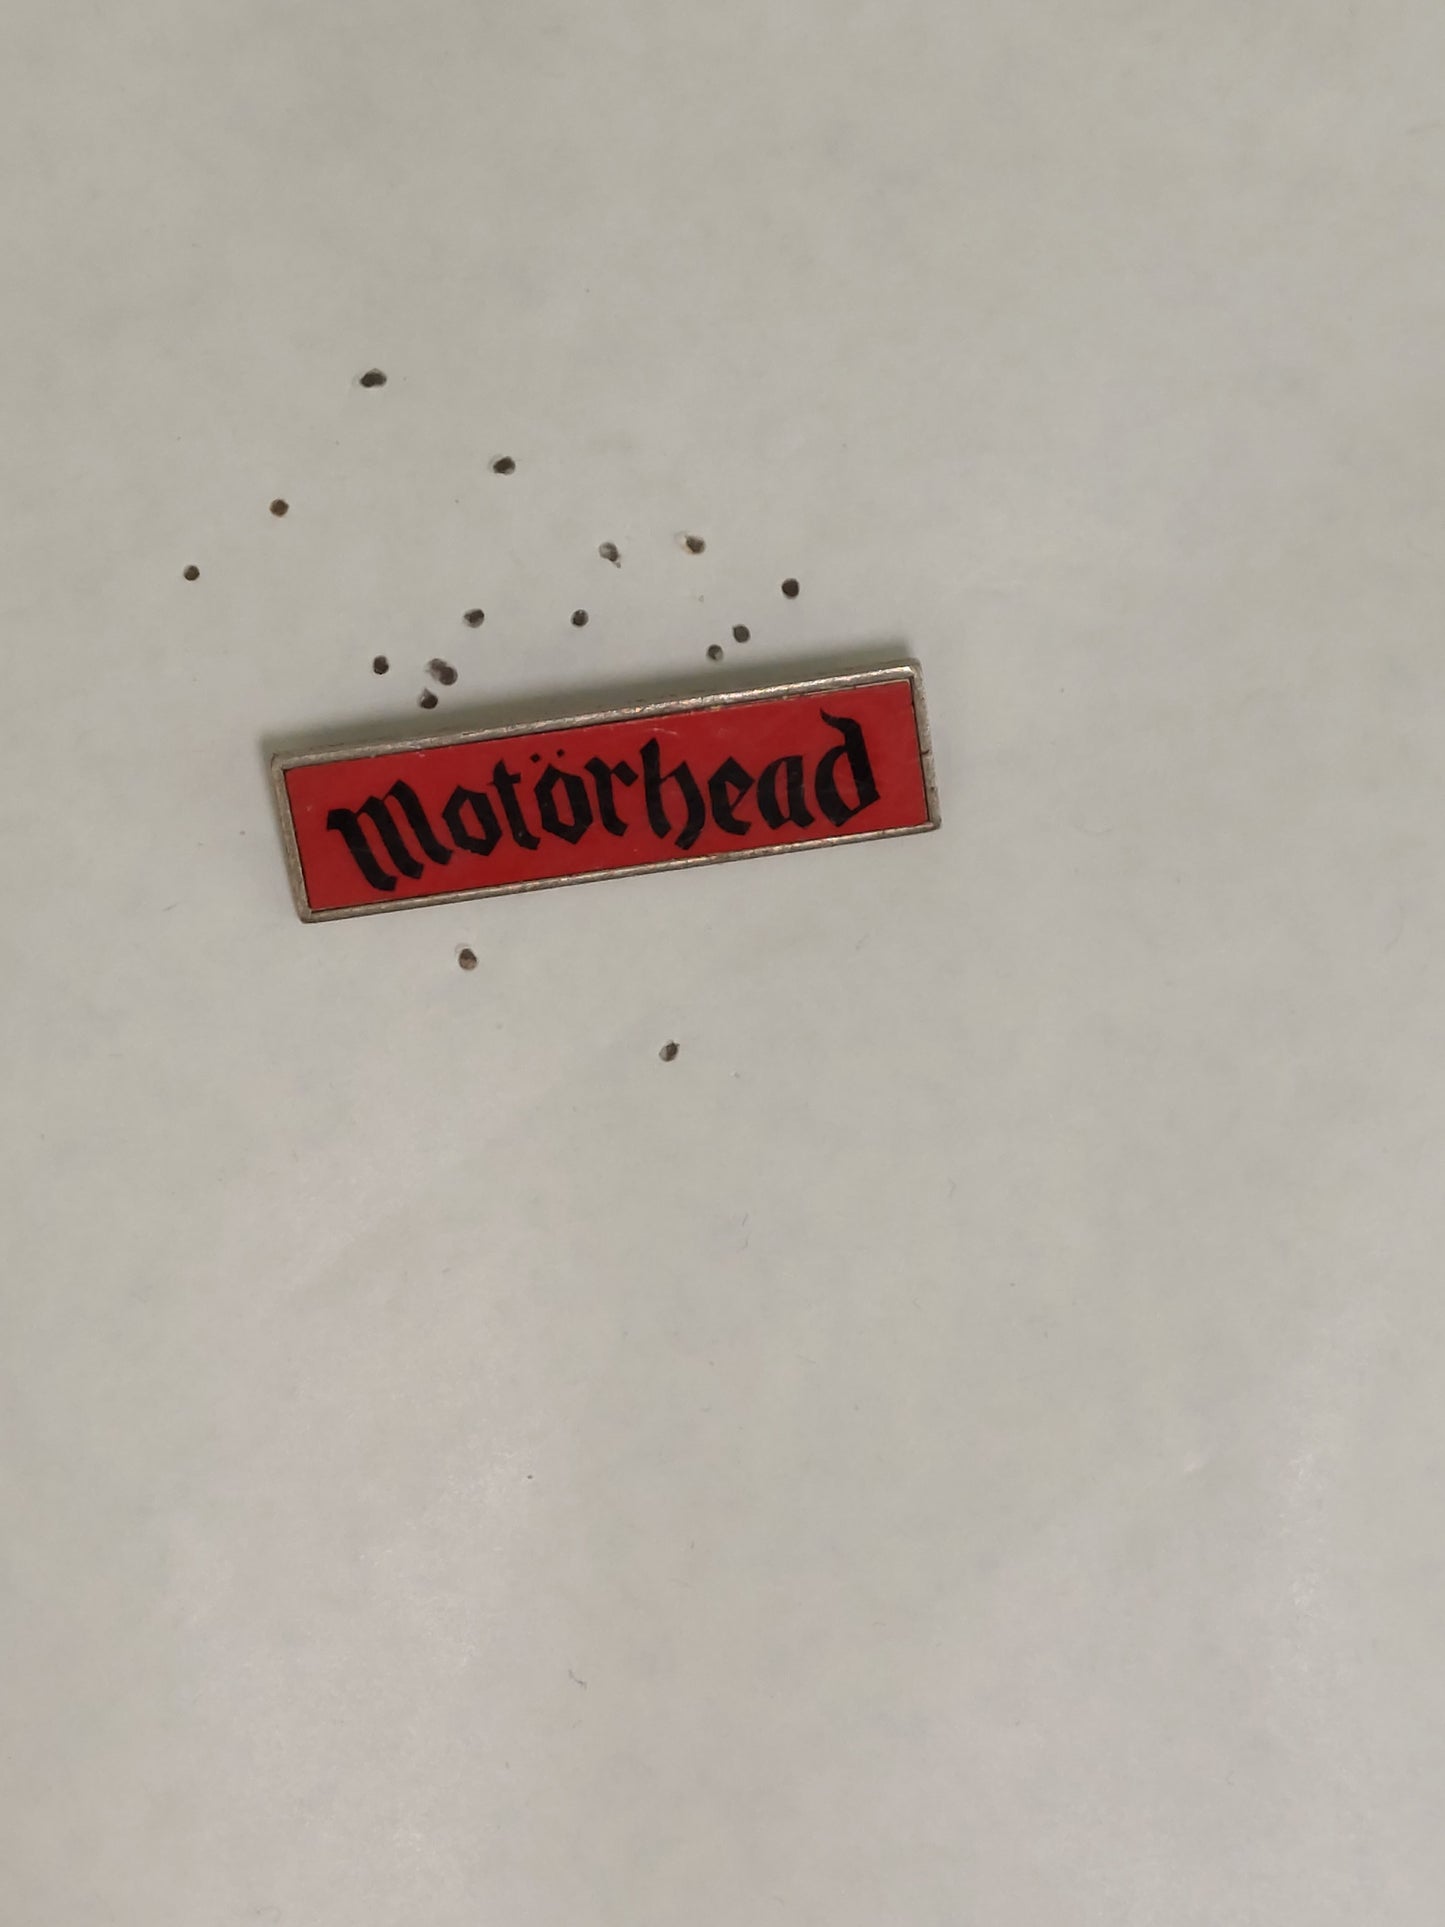 Motorhead logo badge